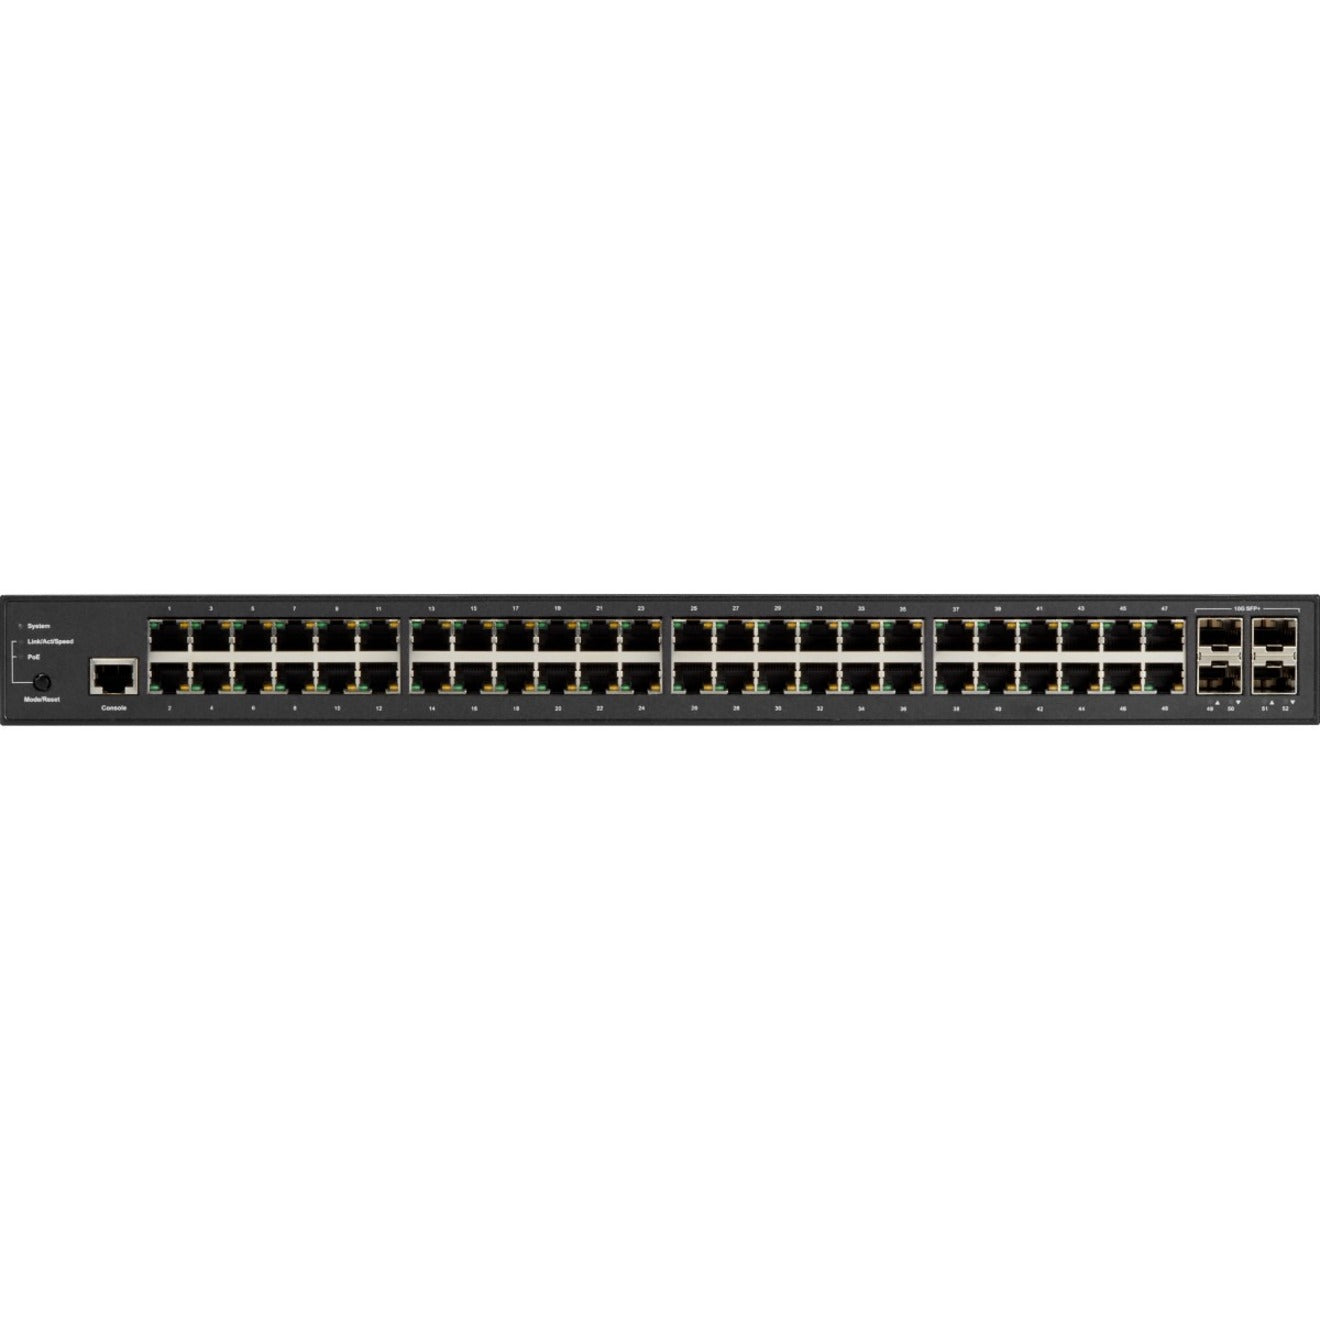 Black Box LPB3052A LPB3000 Ethernet Switch, 48 Port Gigabit Ethernet PoE+, 4 Port 10 Gigabit Ethernet SFP+ Expansion Slot, 740W PoE Budget